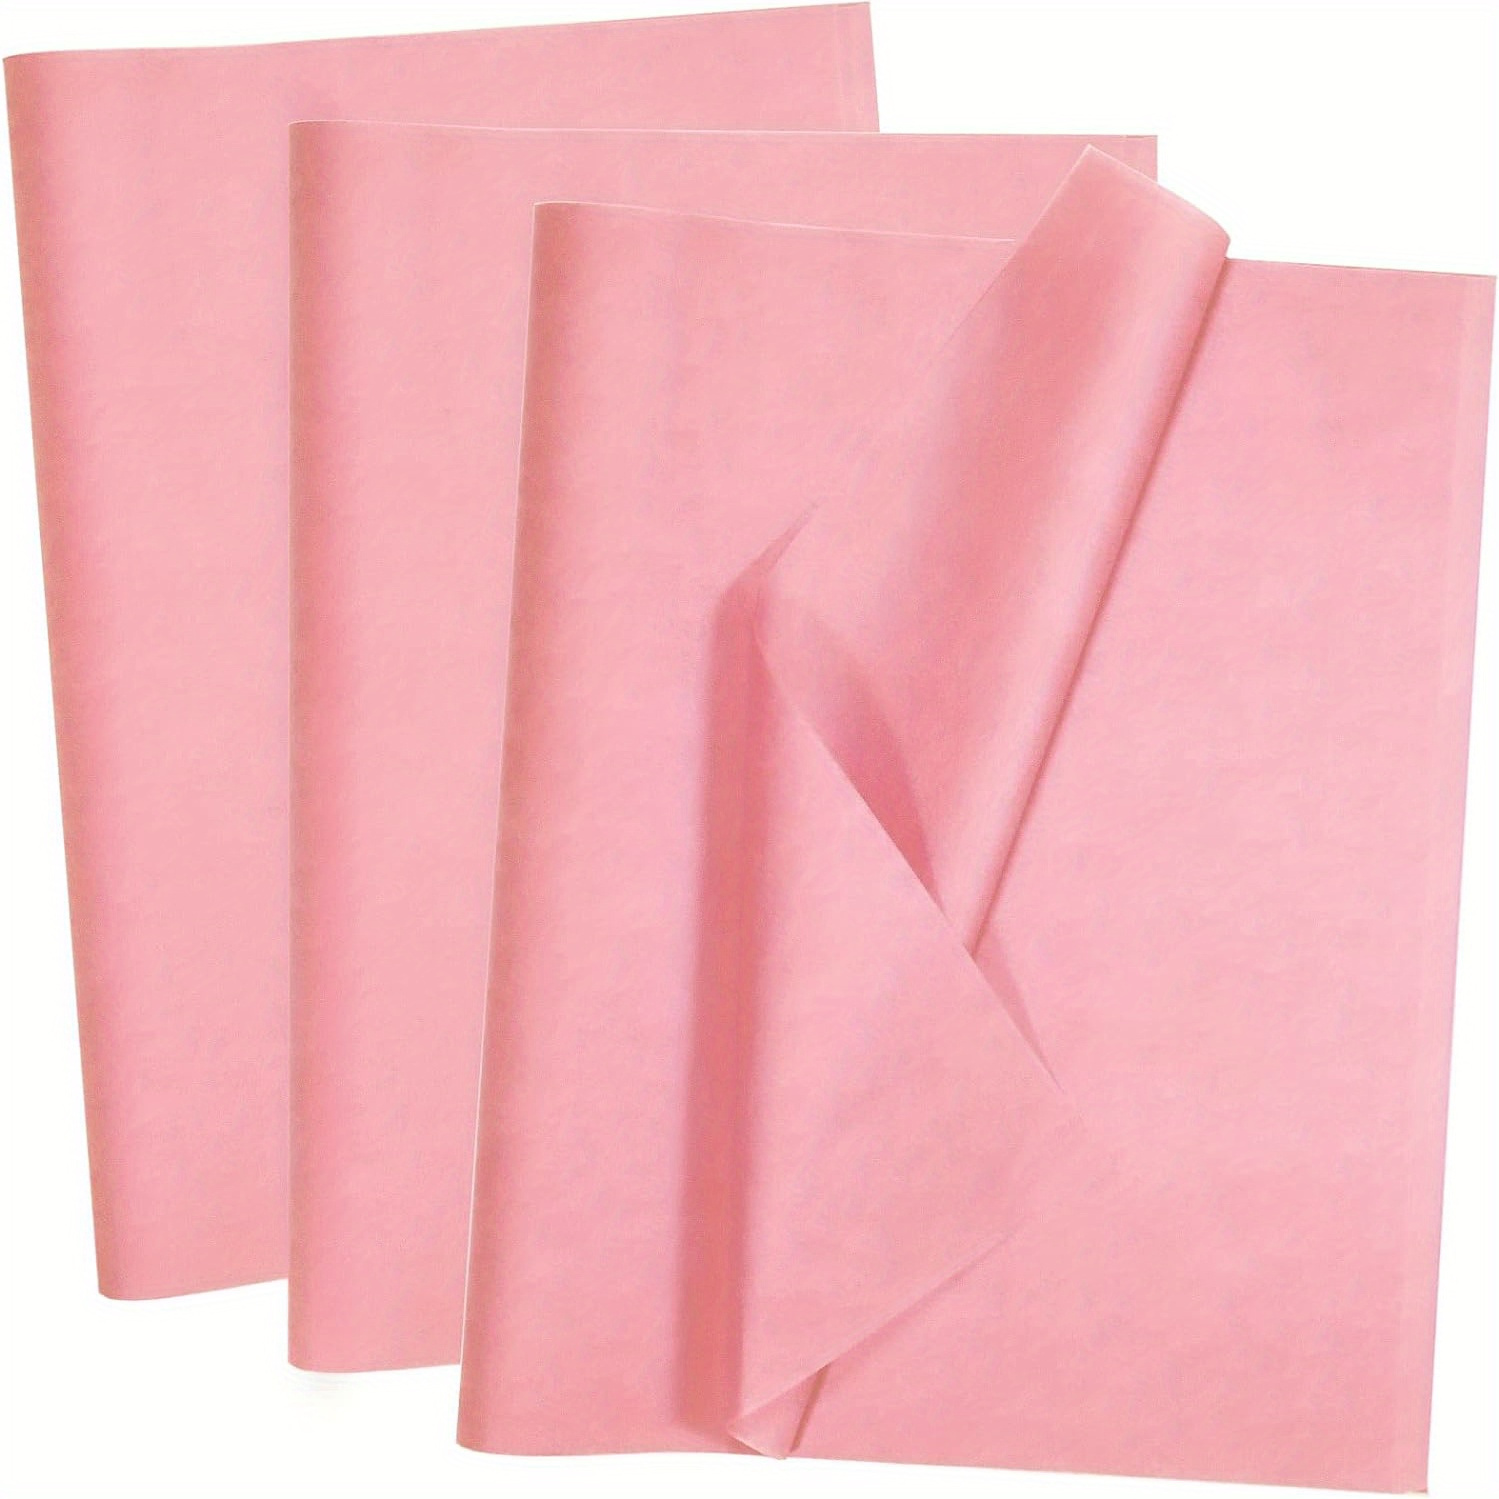  Acid Free Tissue Paper 20 X 27 by Satin Wrap